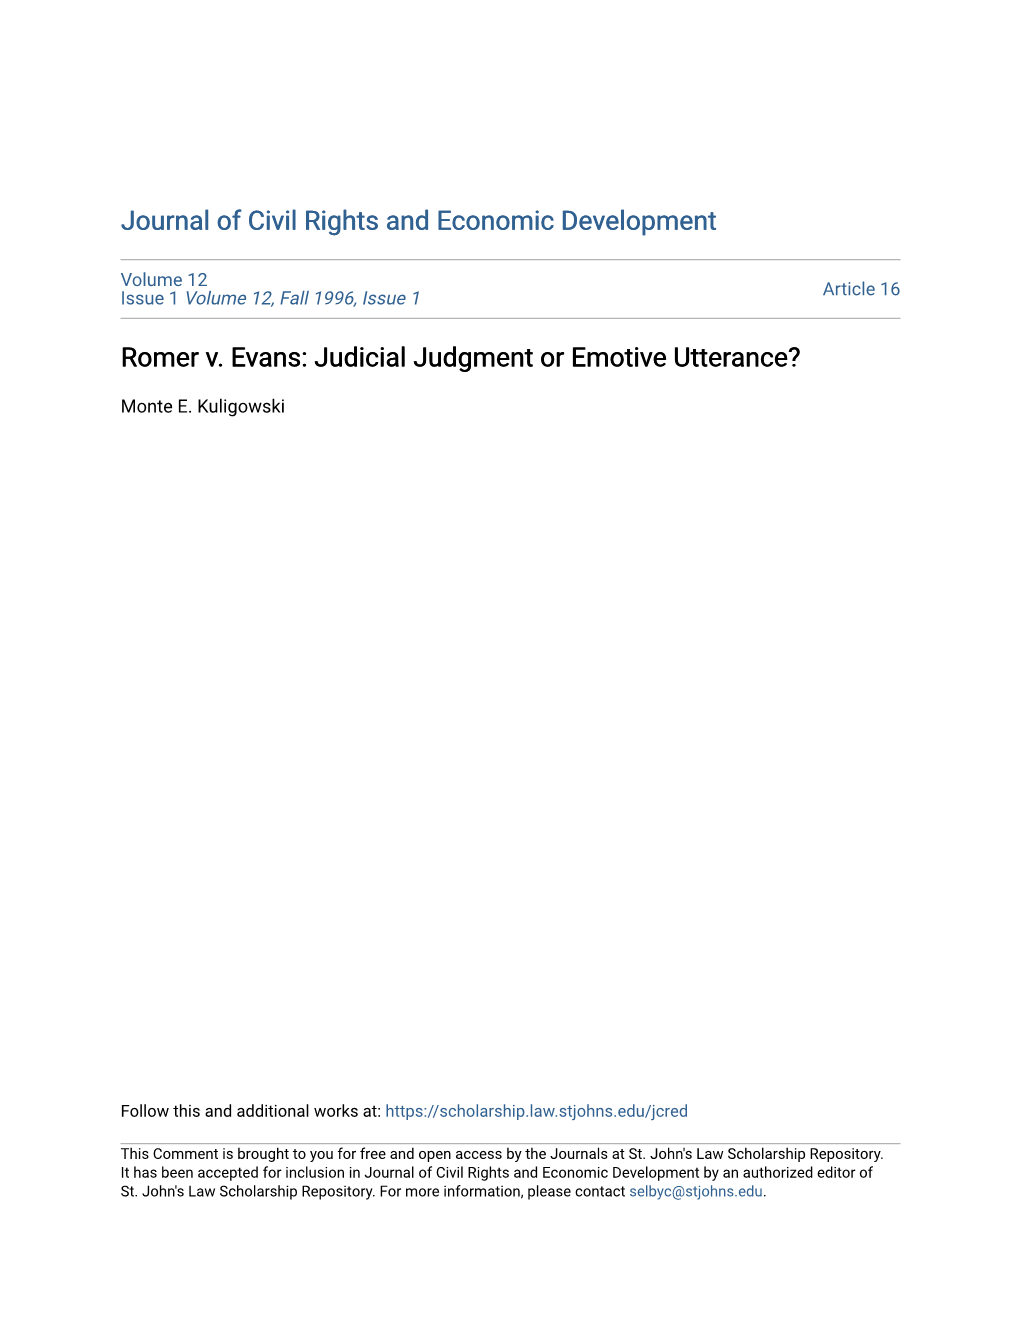 Romer V. Evans: Judicial Judgment Or Emotive Utterance?